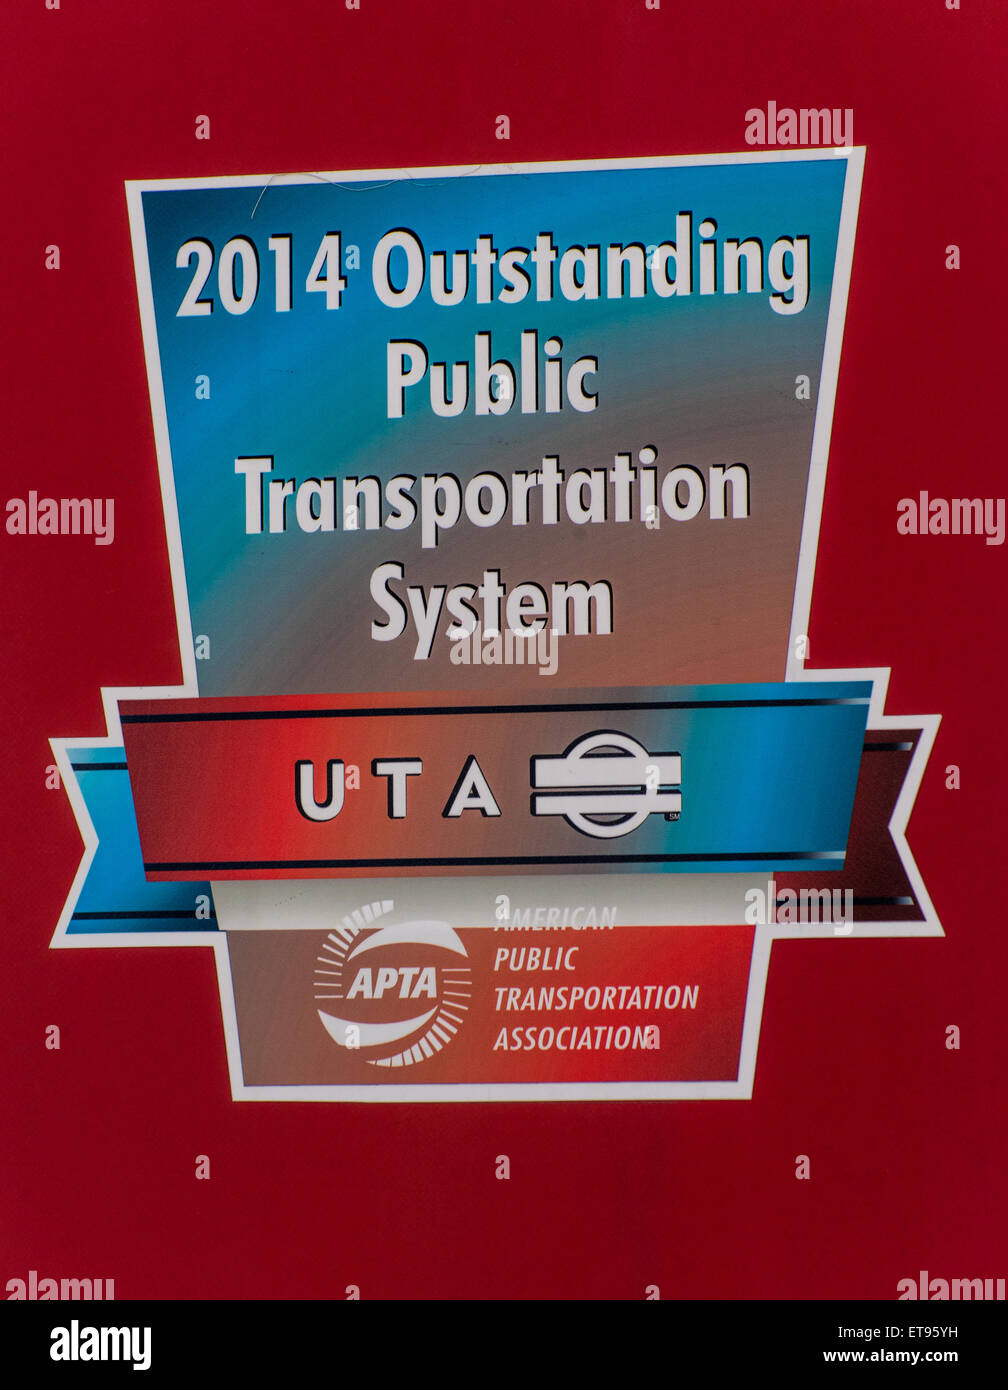 2014 Outstanding Public Transportation System - Utah Transit Authority (UTA) recognition sign Stock Photo